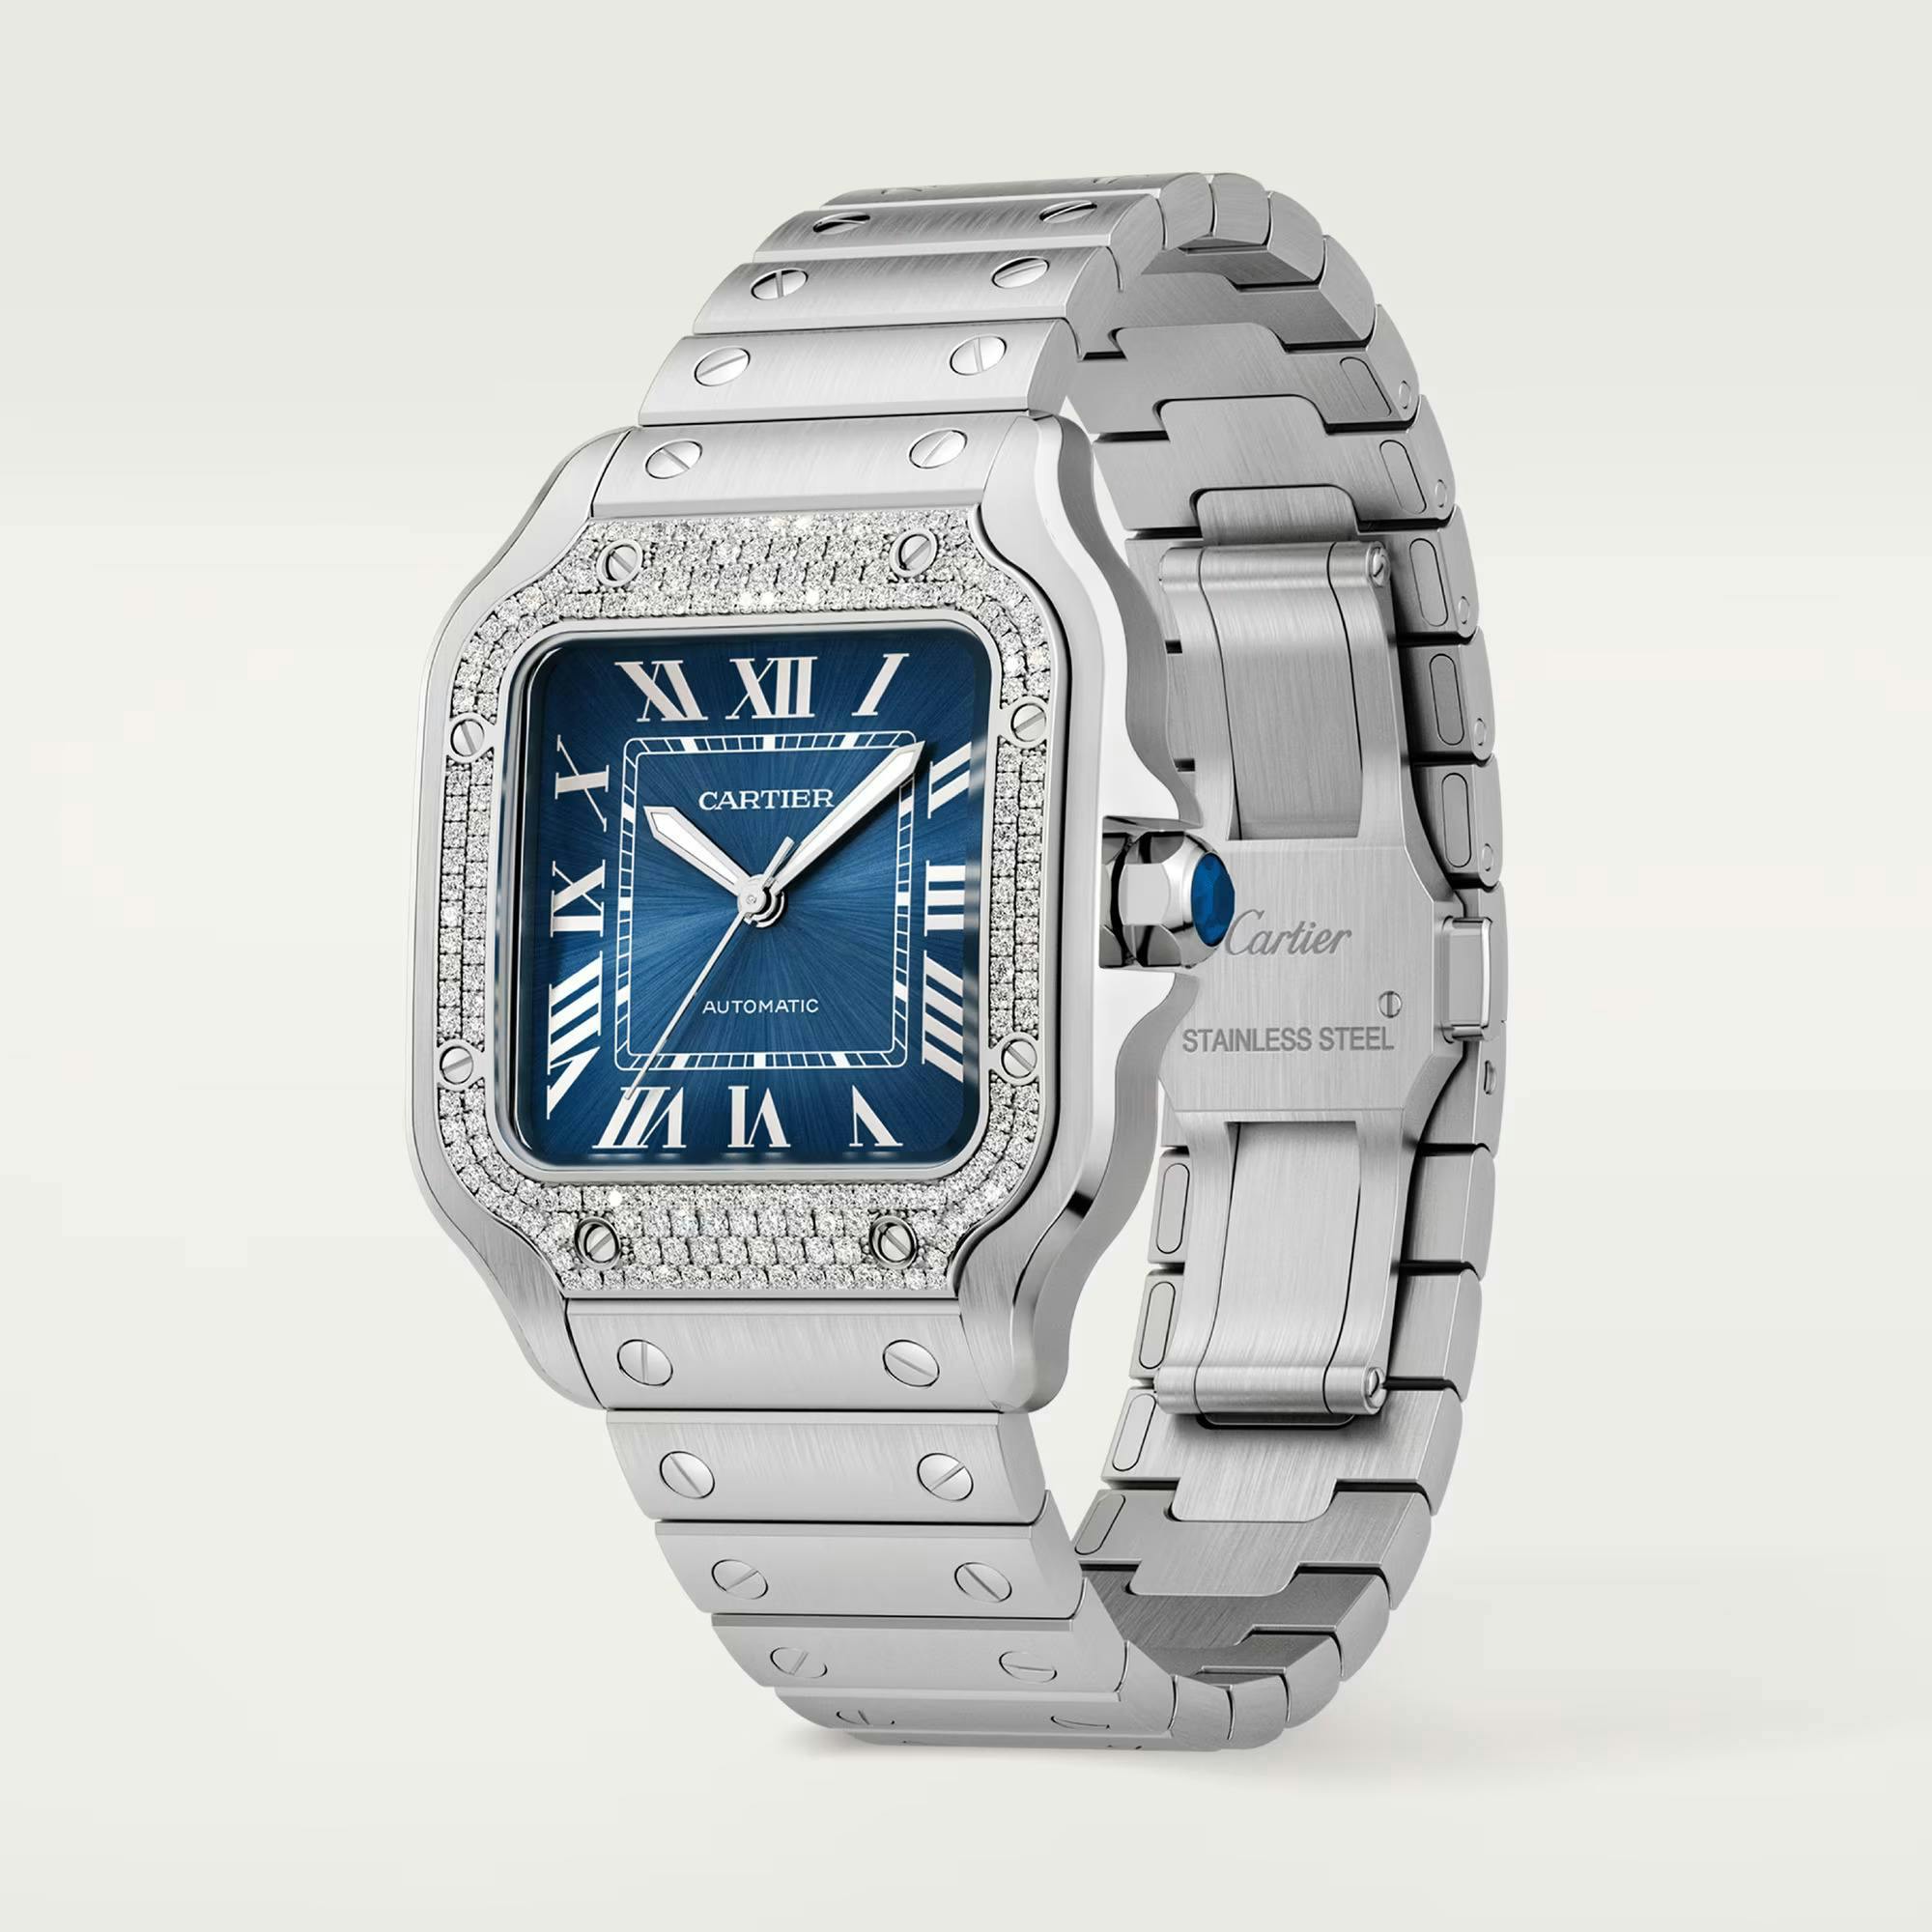 Santos de Cartier Watch with Blue Dial and Diamonds, medium model 8